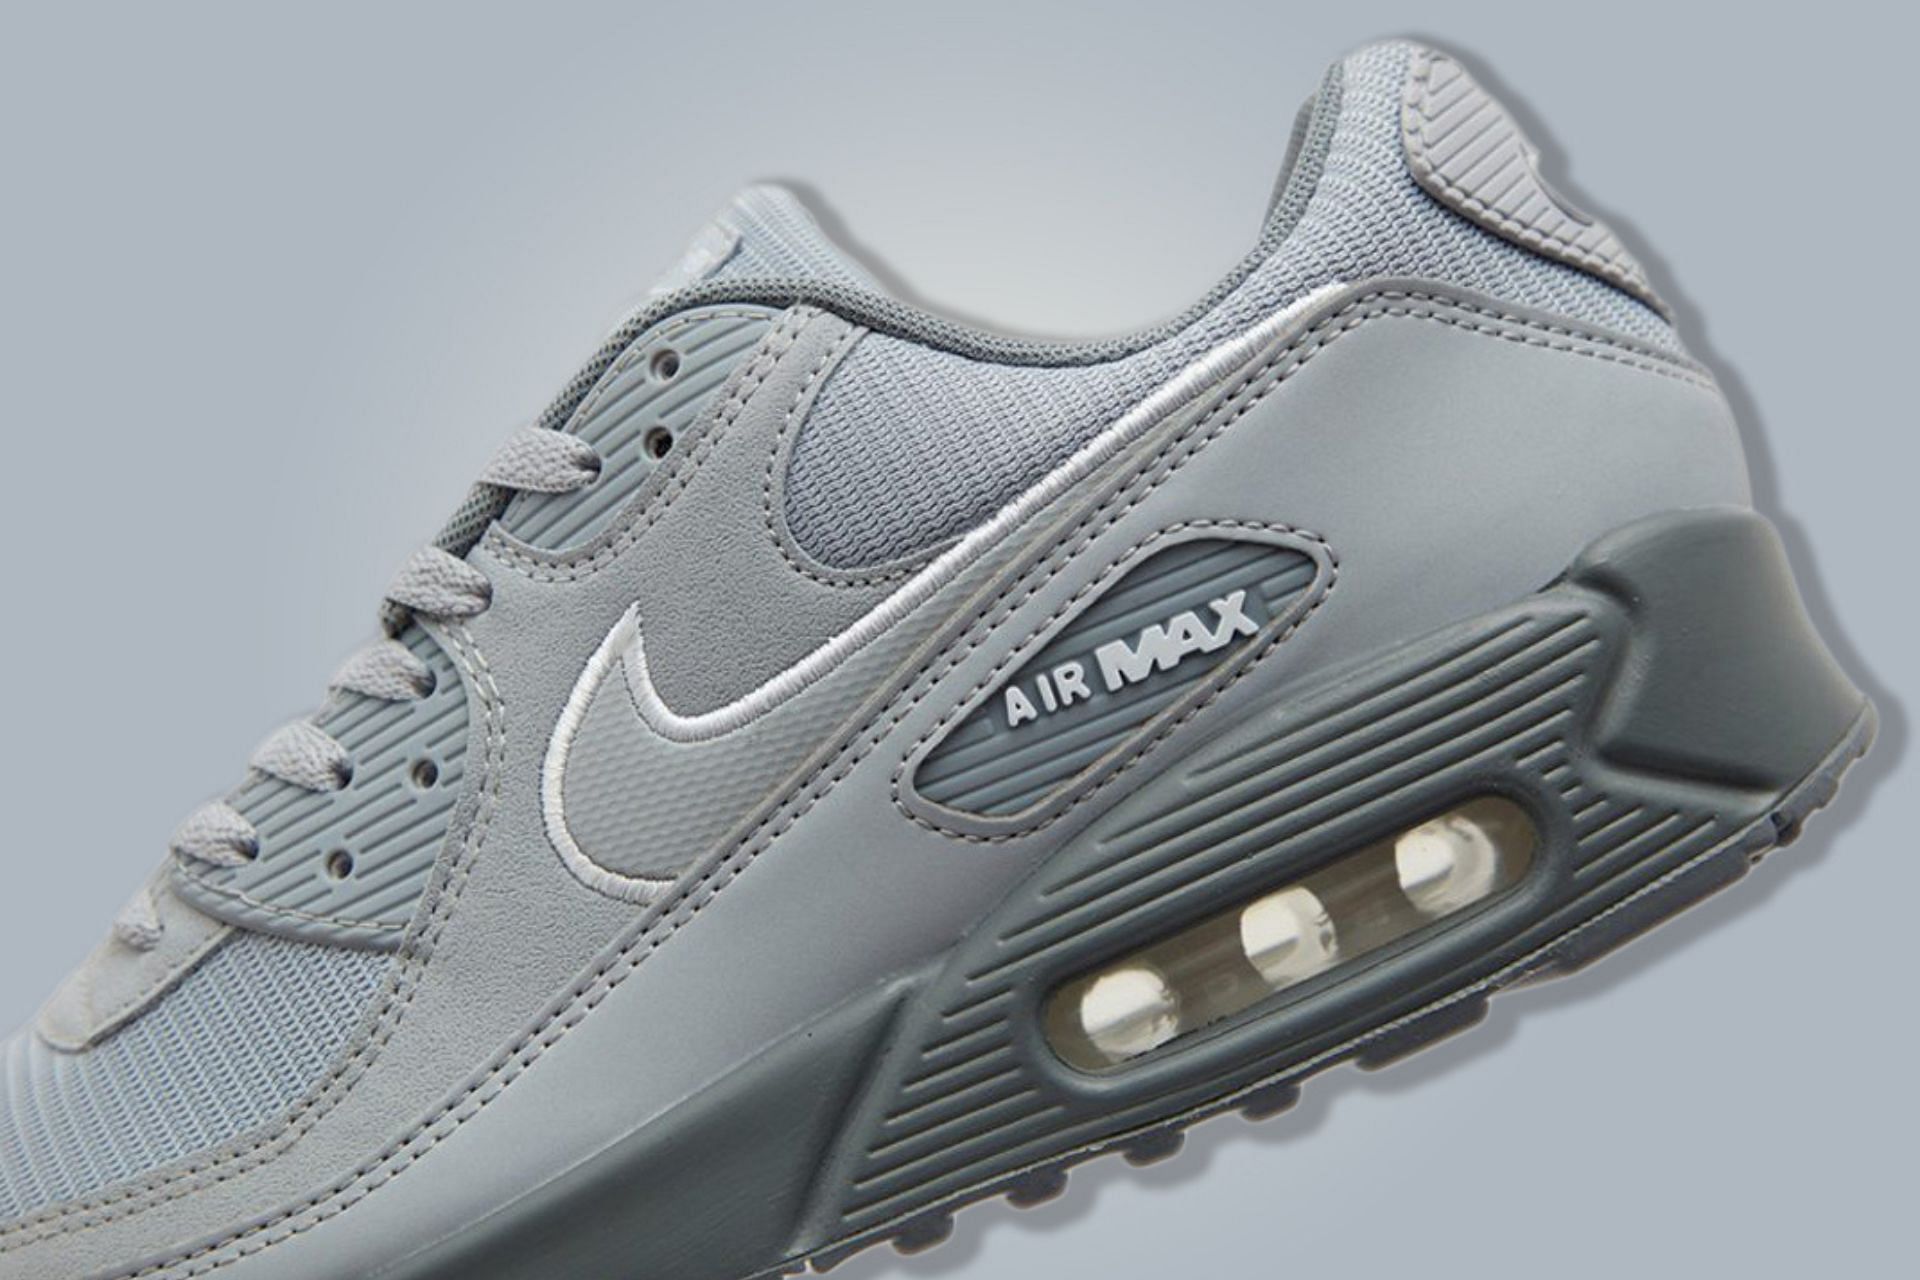 Nike Air Max 90 Wolf Grey sneakers (Image via Offspring)